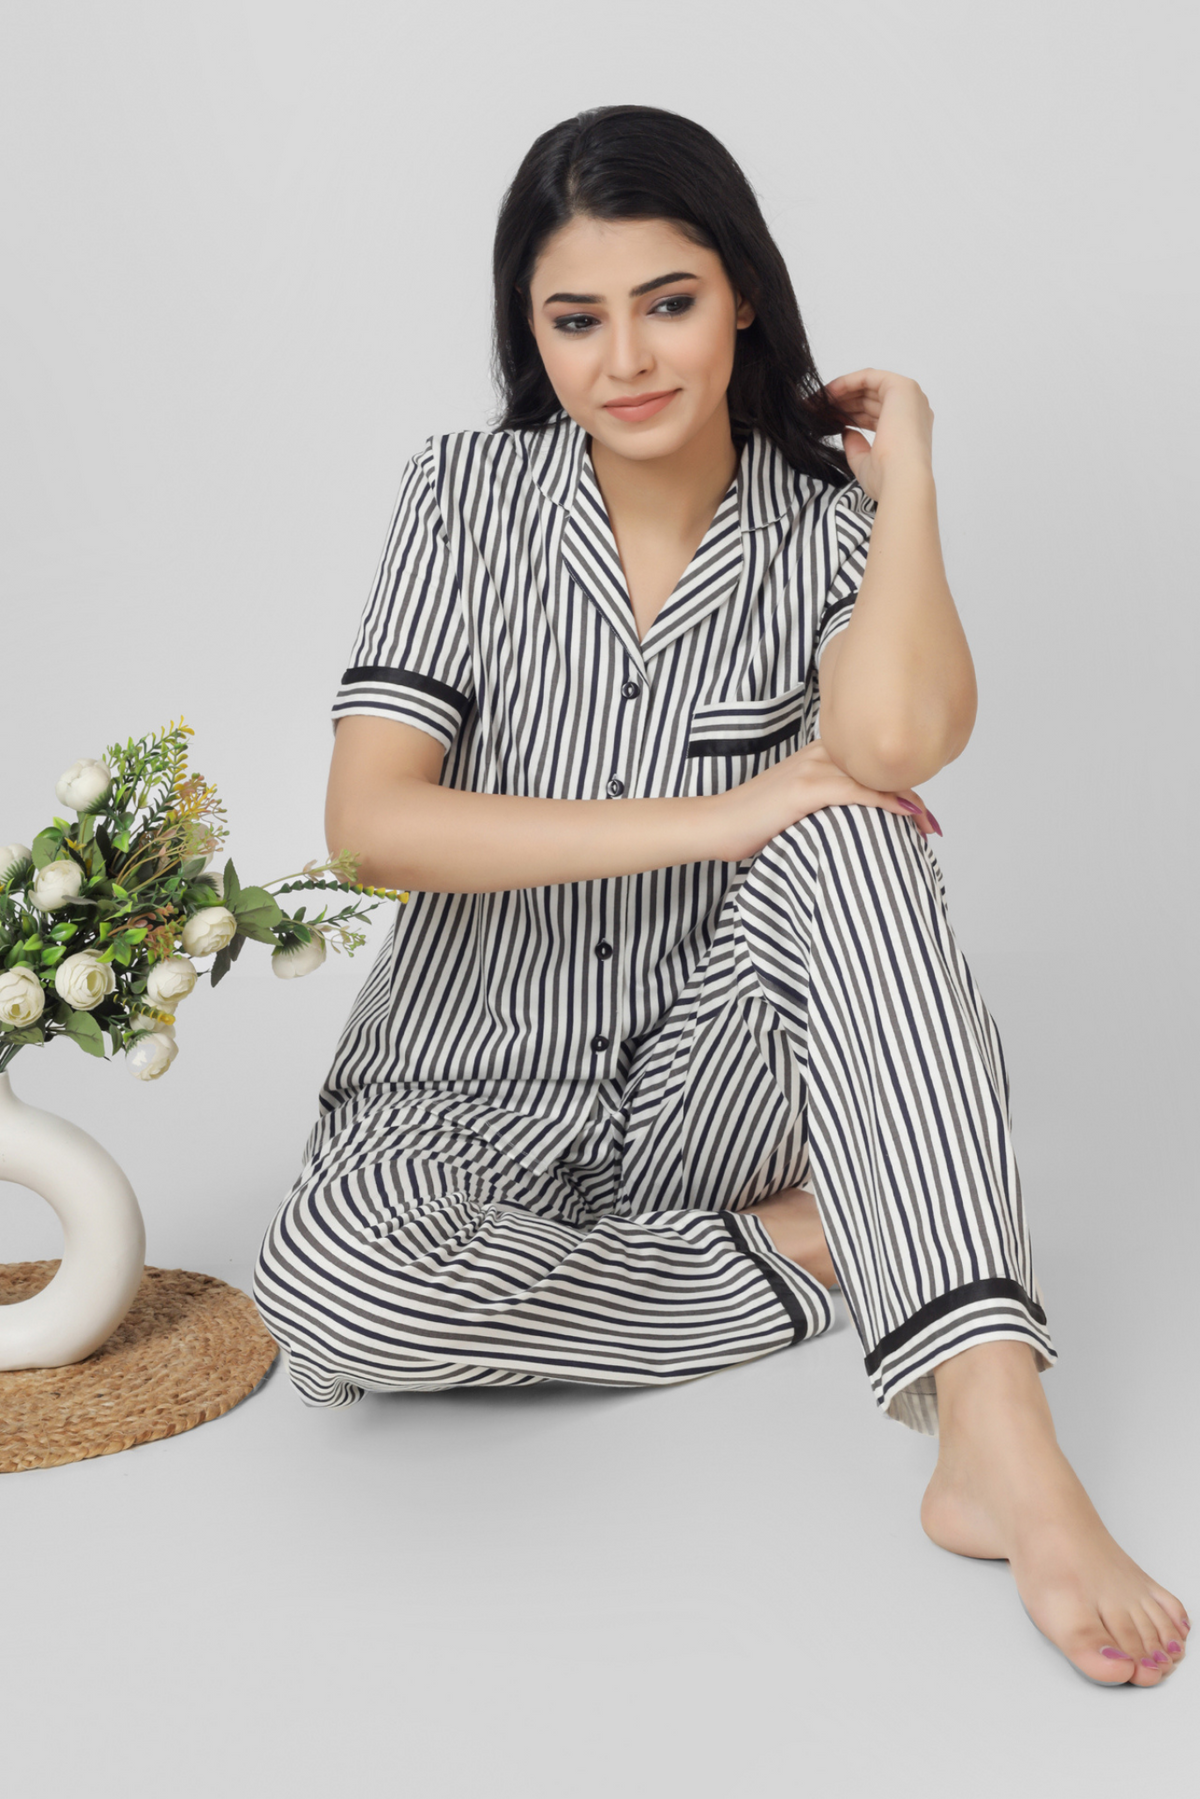 Timeless Stripe Serenade Pyjama Set - Women's nightwear with black and white stripes.